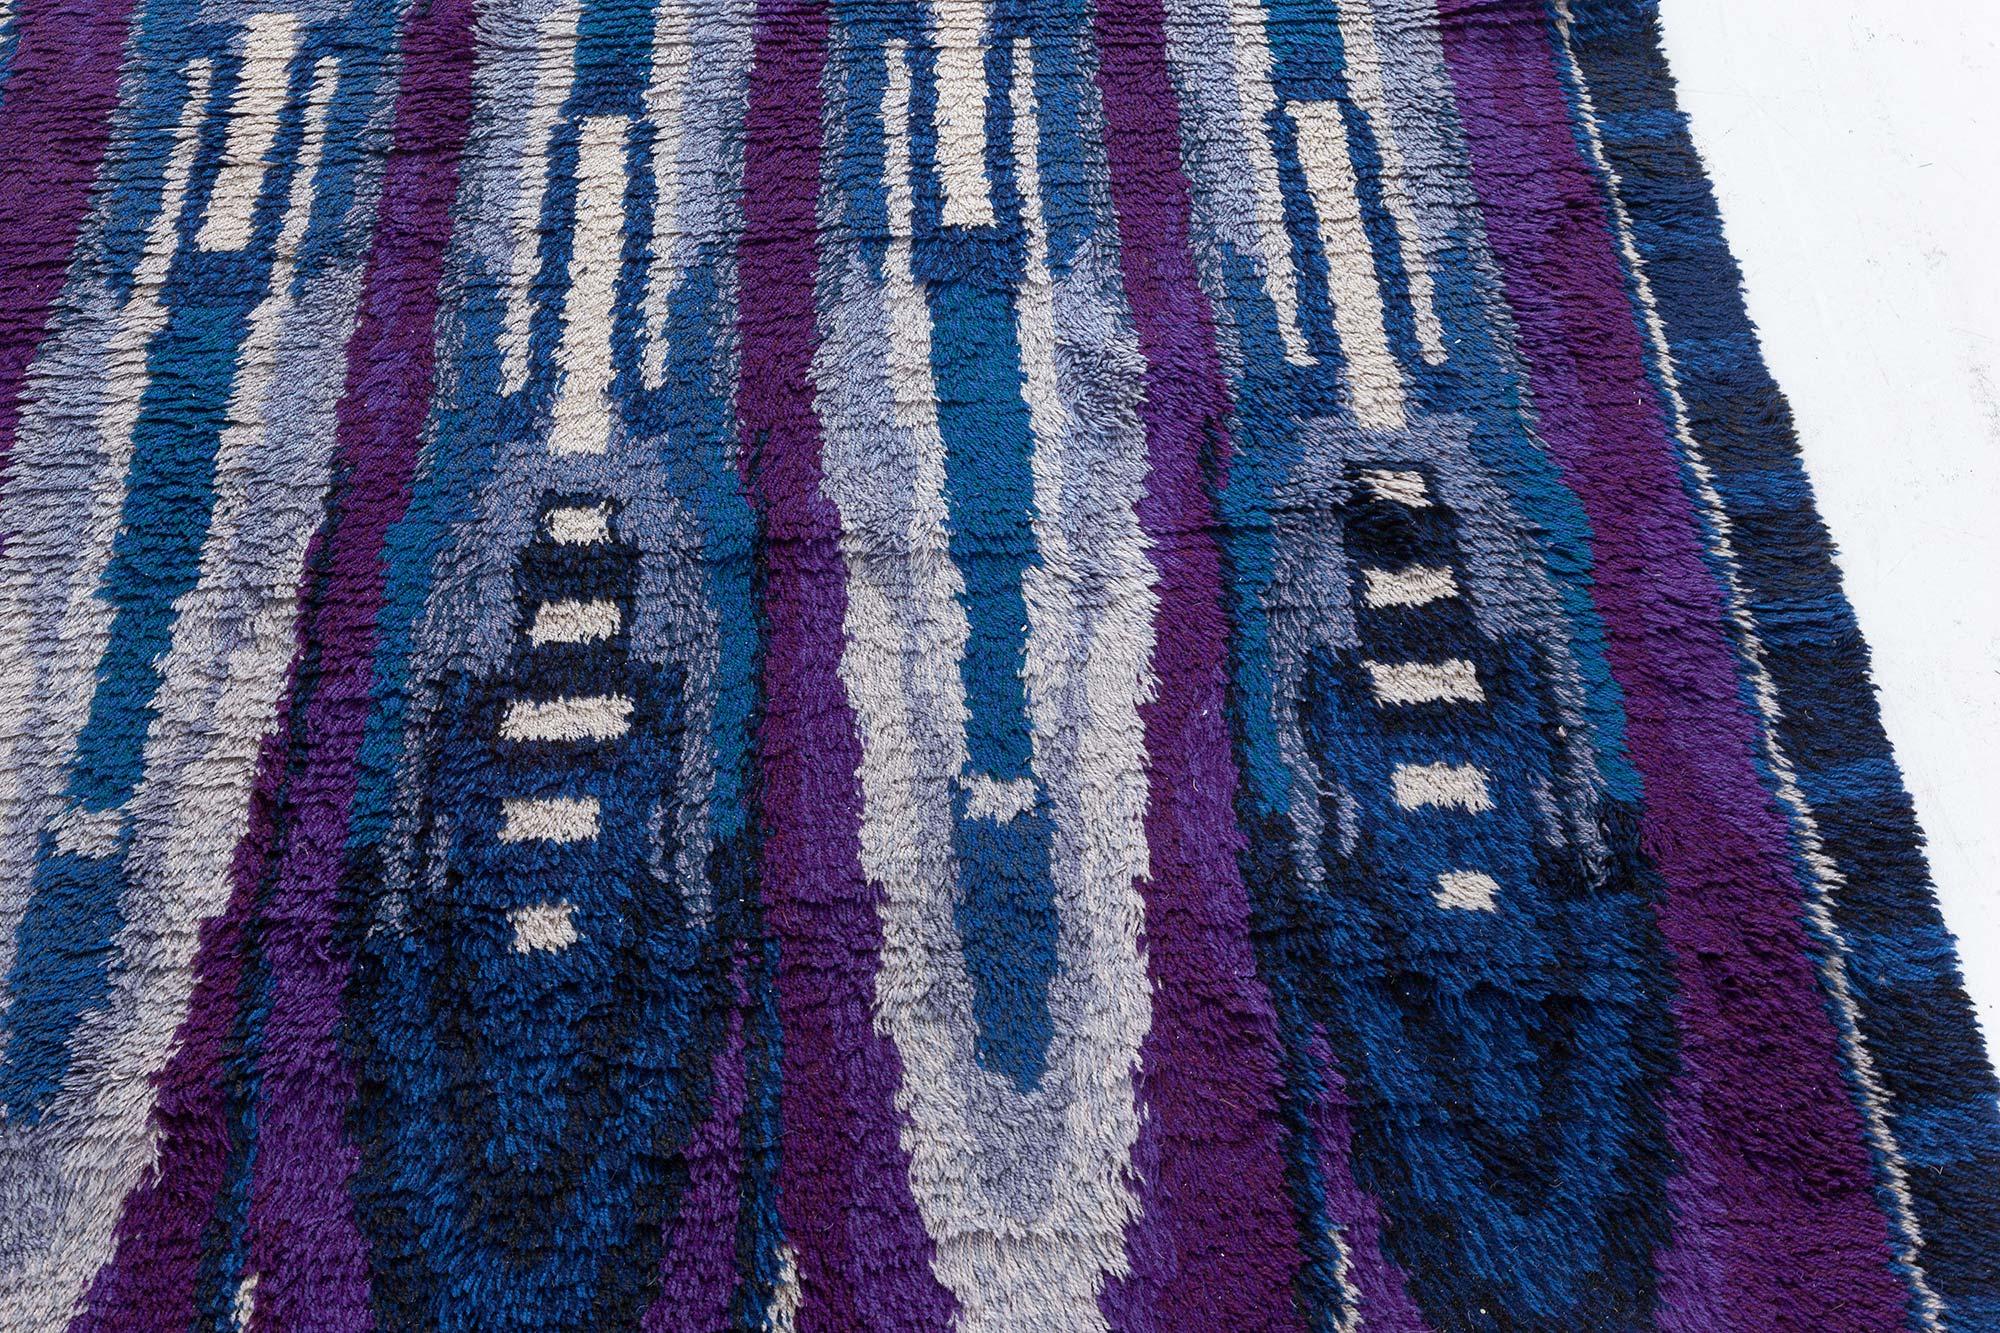 Vintage Rya blue and purple handmade wool rug
Size: 4'7